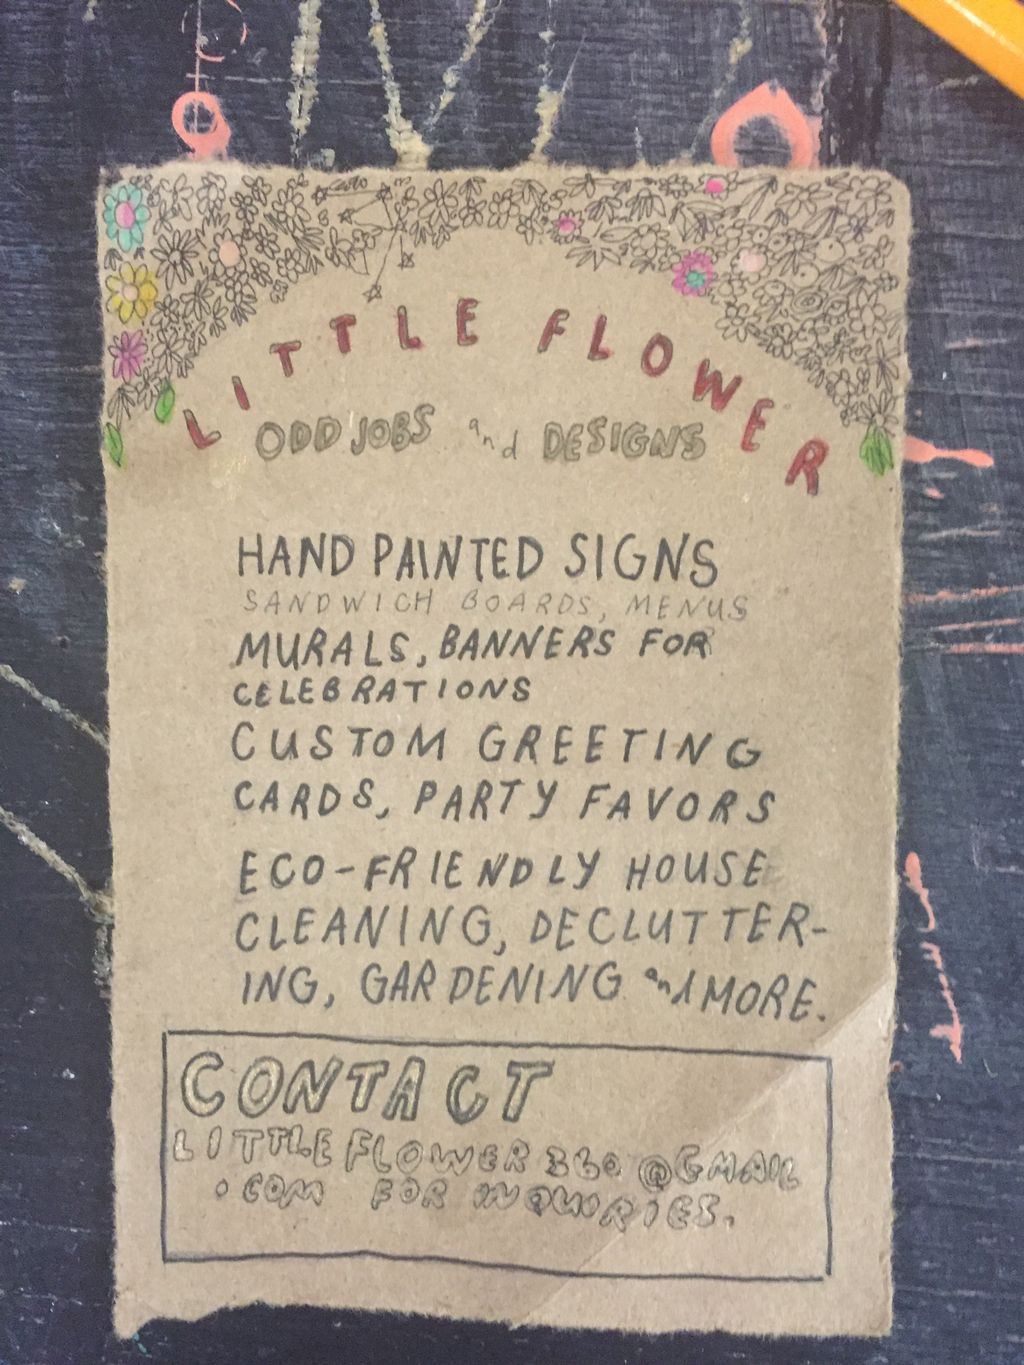 Little Flower Design Collective